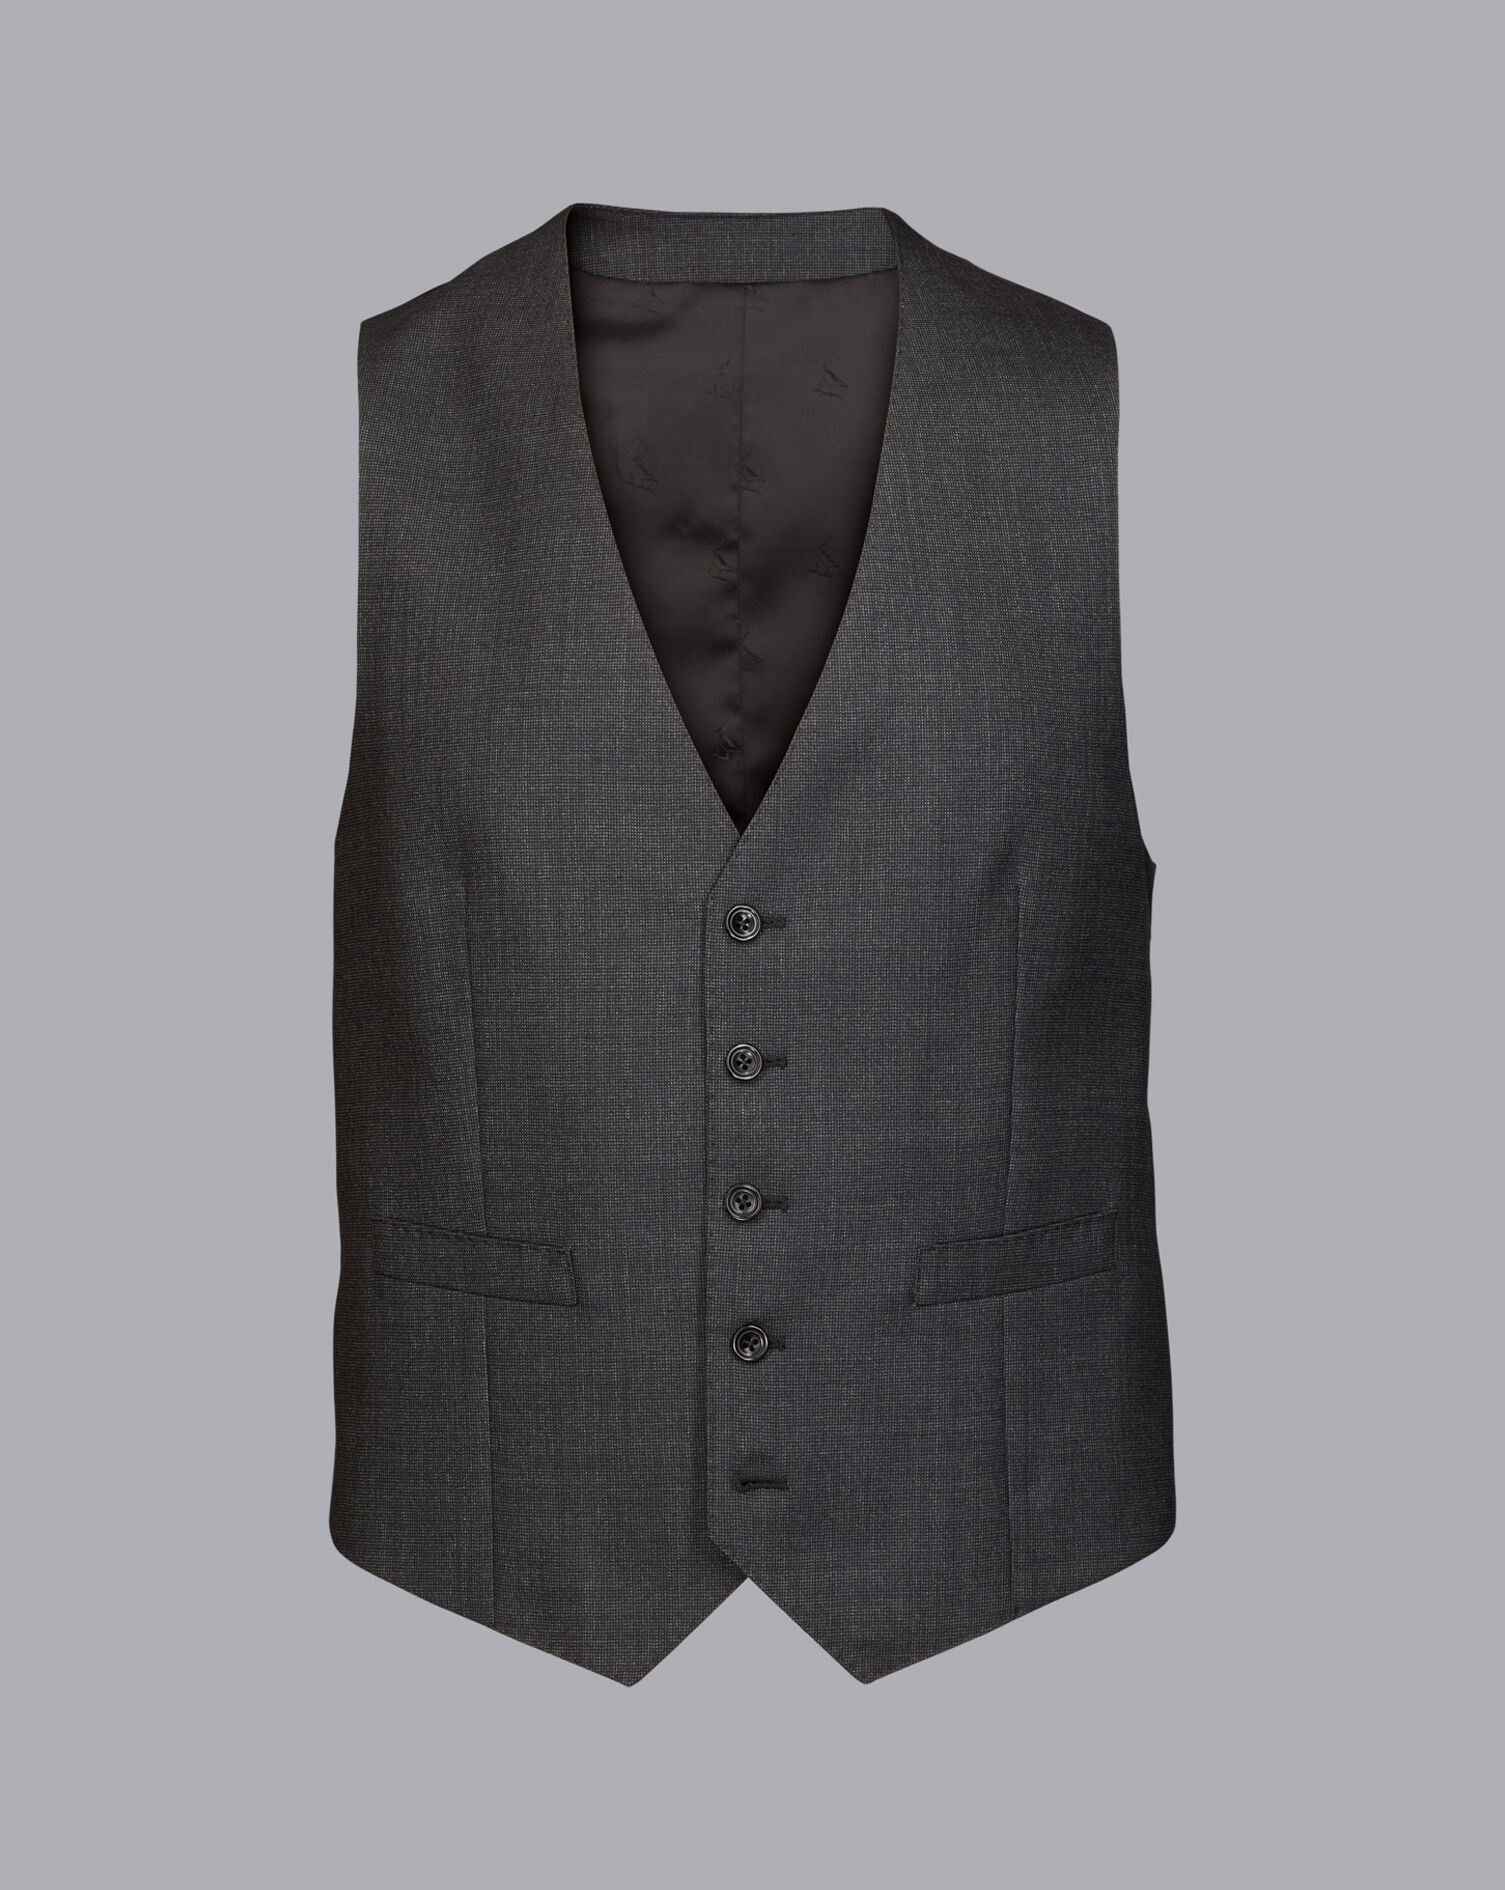 Marc Darcy Jenson Grey 3 Piece Suit With Max Black Waistcoat  SuitsMe